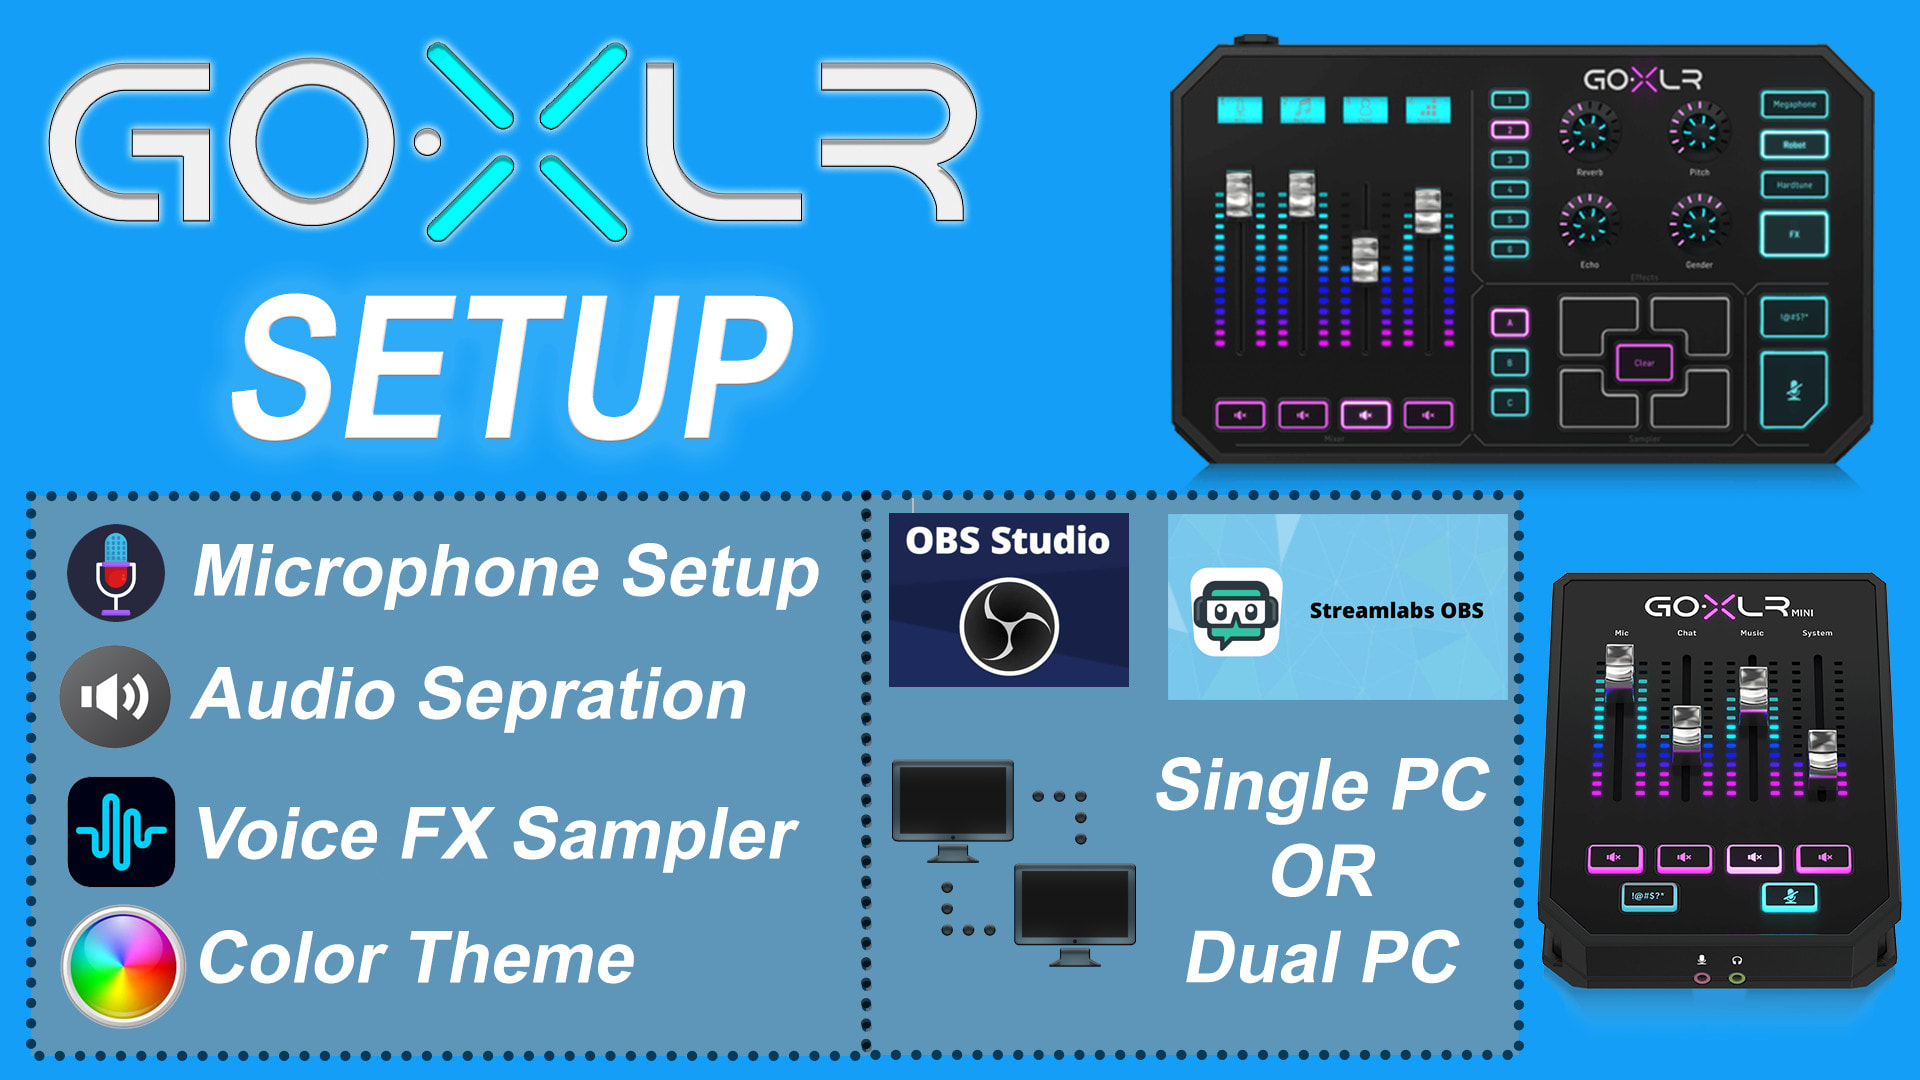 TC HELICON - GO XLR MINI - 2 Pc Streaming Setup audio fix